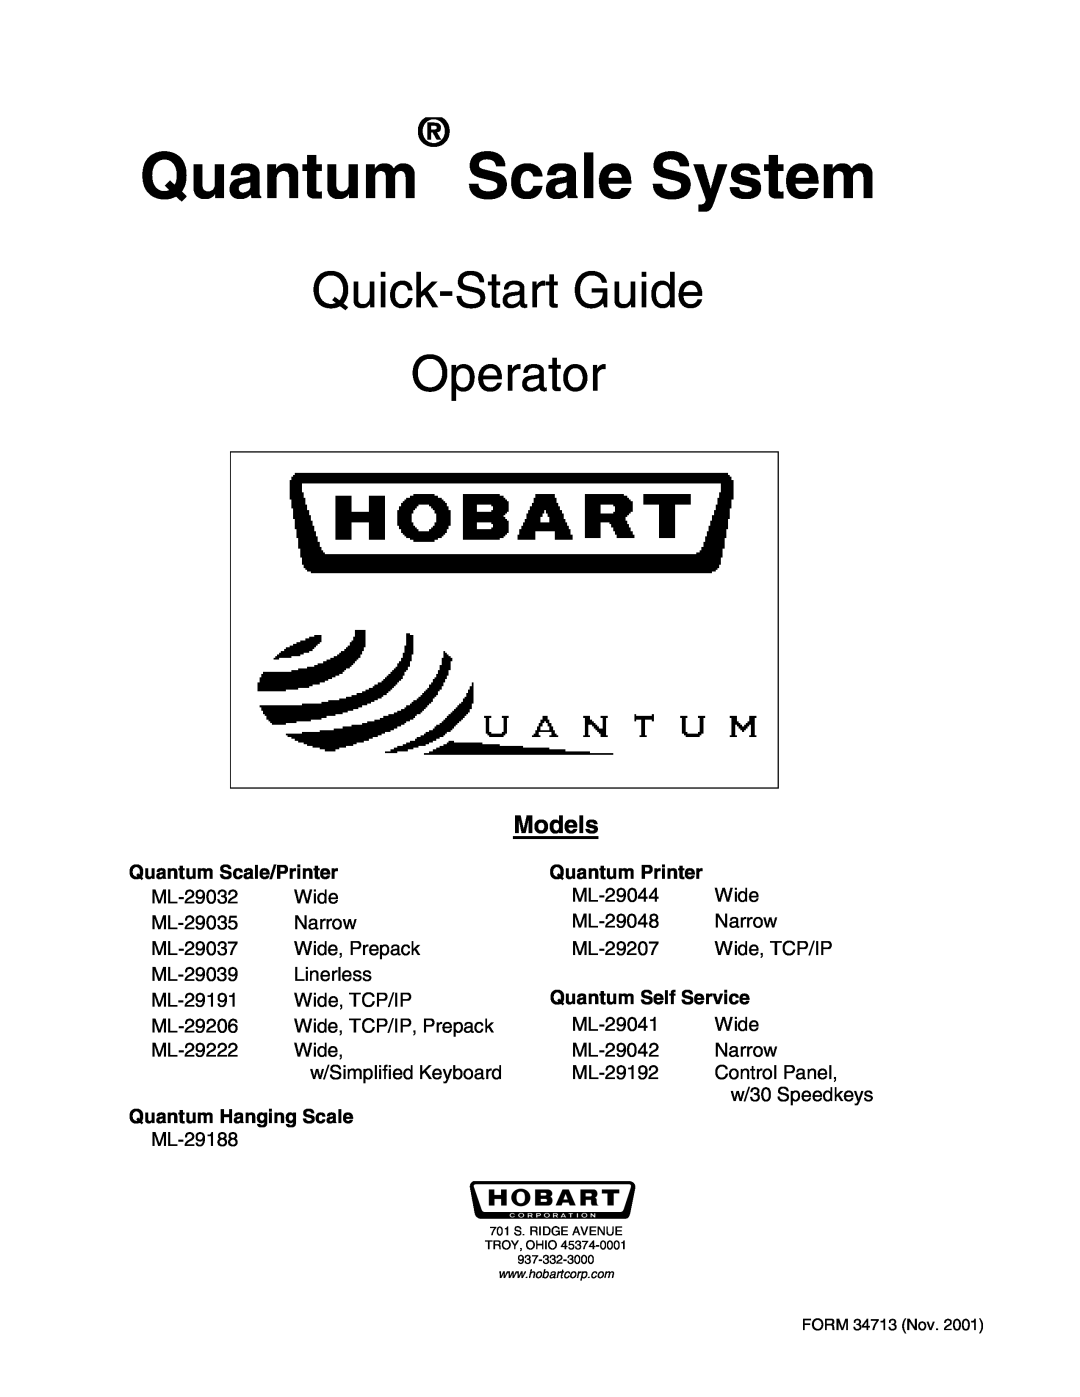 Hobart ML-29207 quick start Quantum Scale/Printer, Quantum Hanging Scale, Quantum Printer, Quantum Self Service, Models 